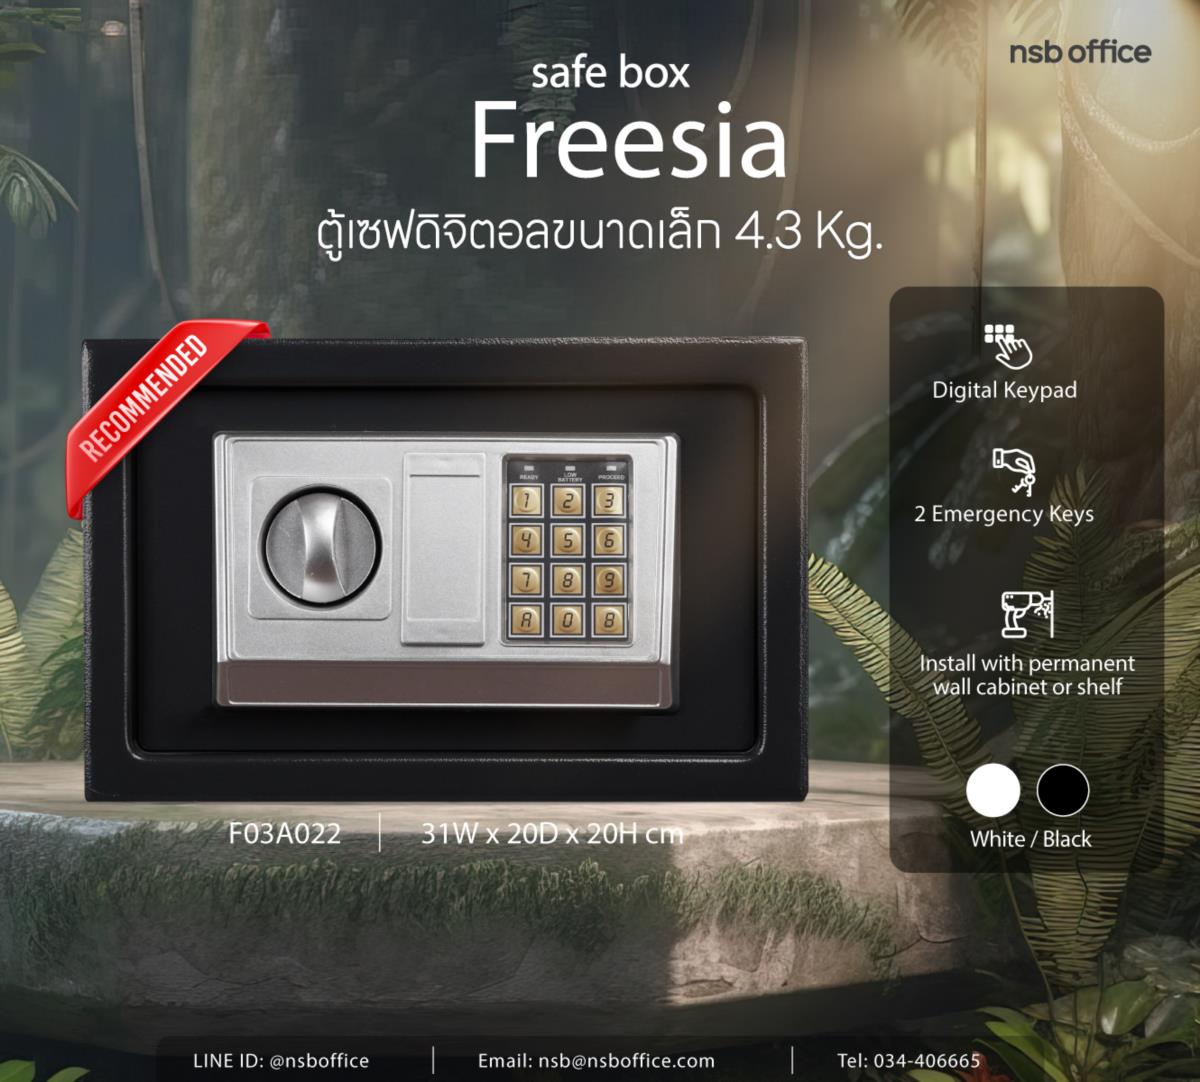 F03A022:ตู้เซฟดิจิตอล รุ่น Freesia (ฟรีเซีย)  1 รหัส (รหัสใช้กดหน้าตู้)